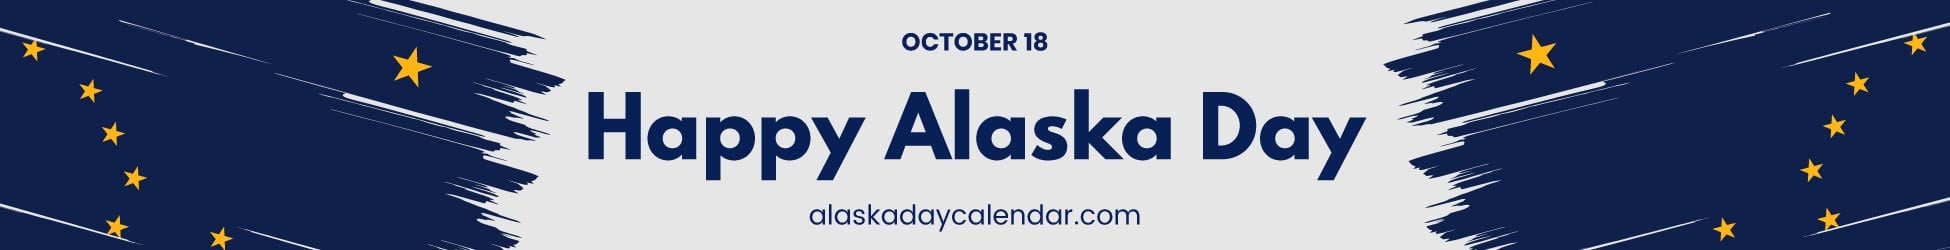 Alaska Day Website Banner in Illustrator, PSD, EPS, SVG, JPG, PNG